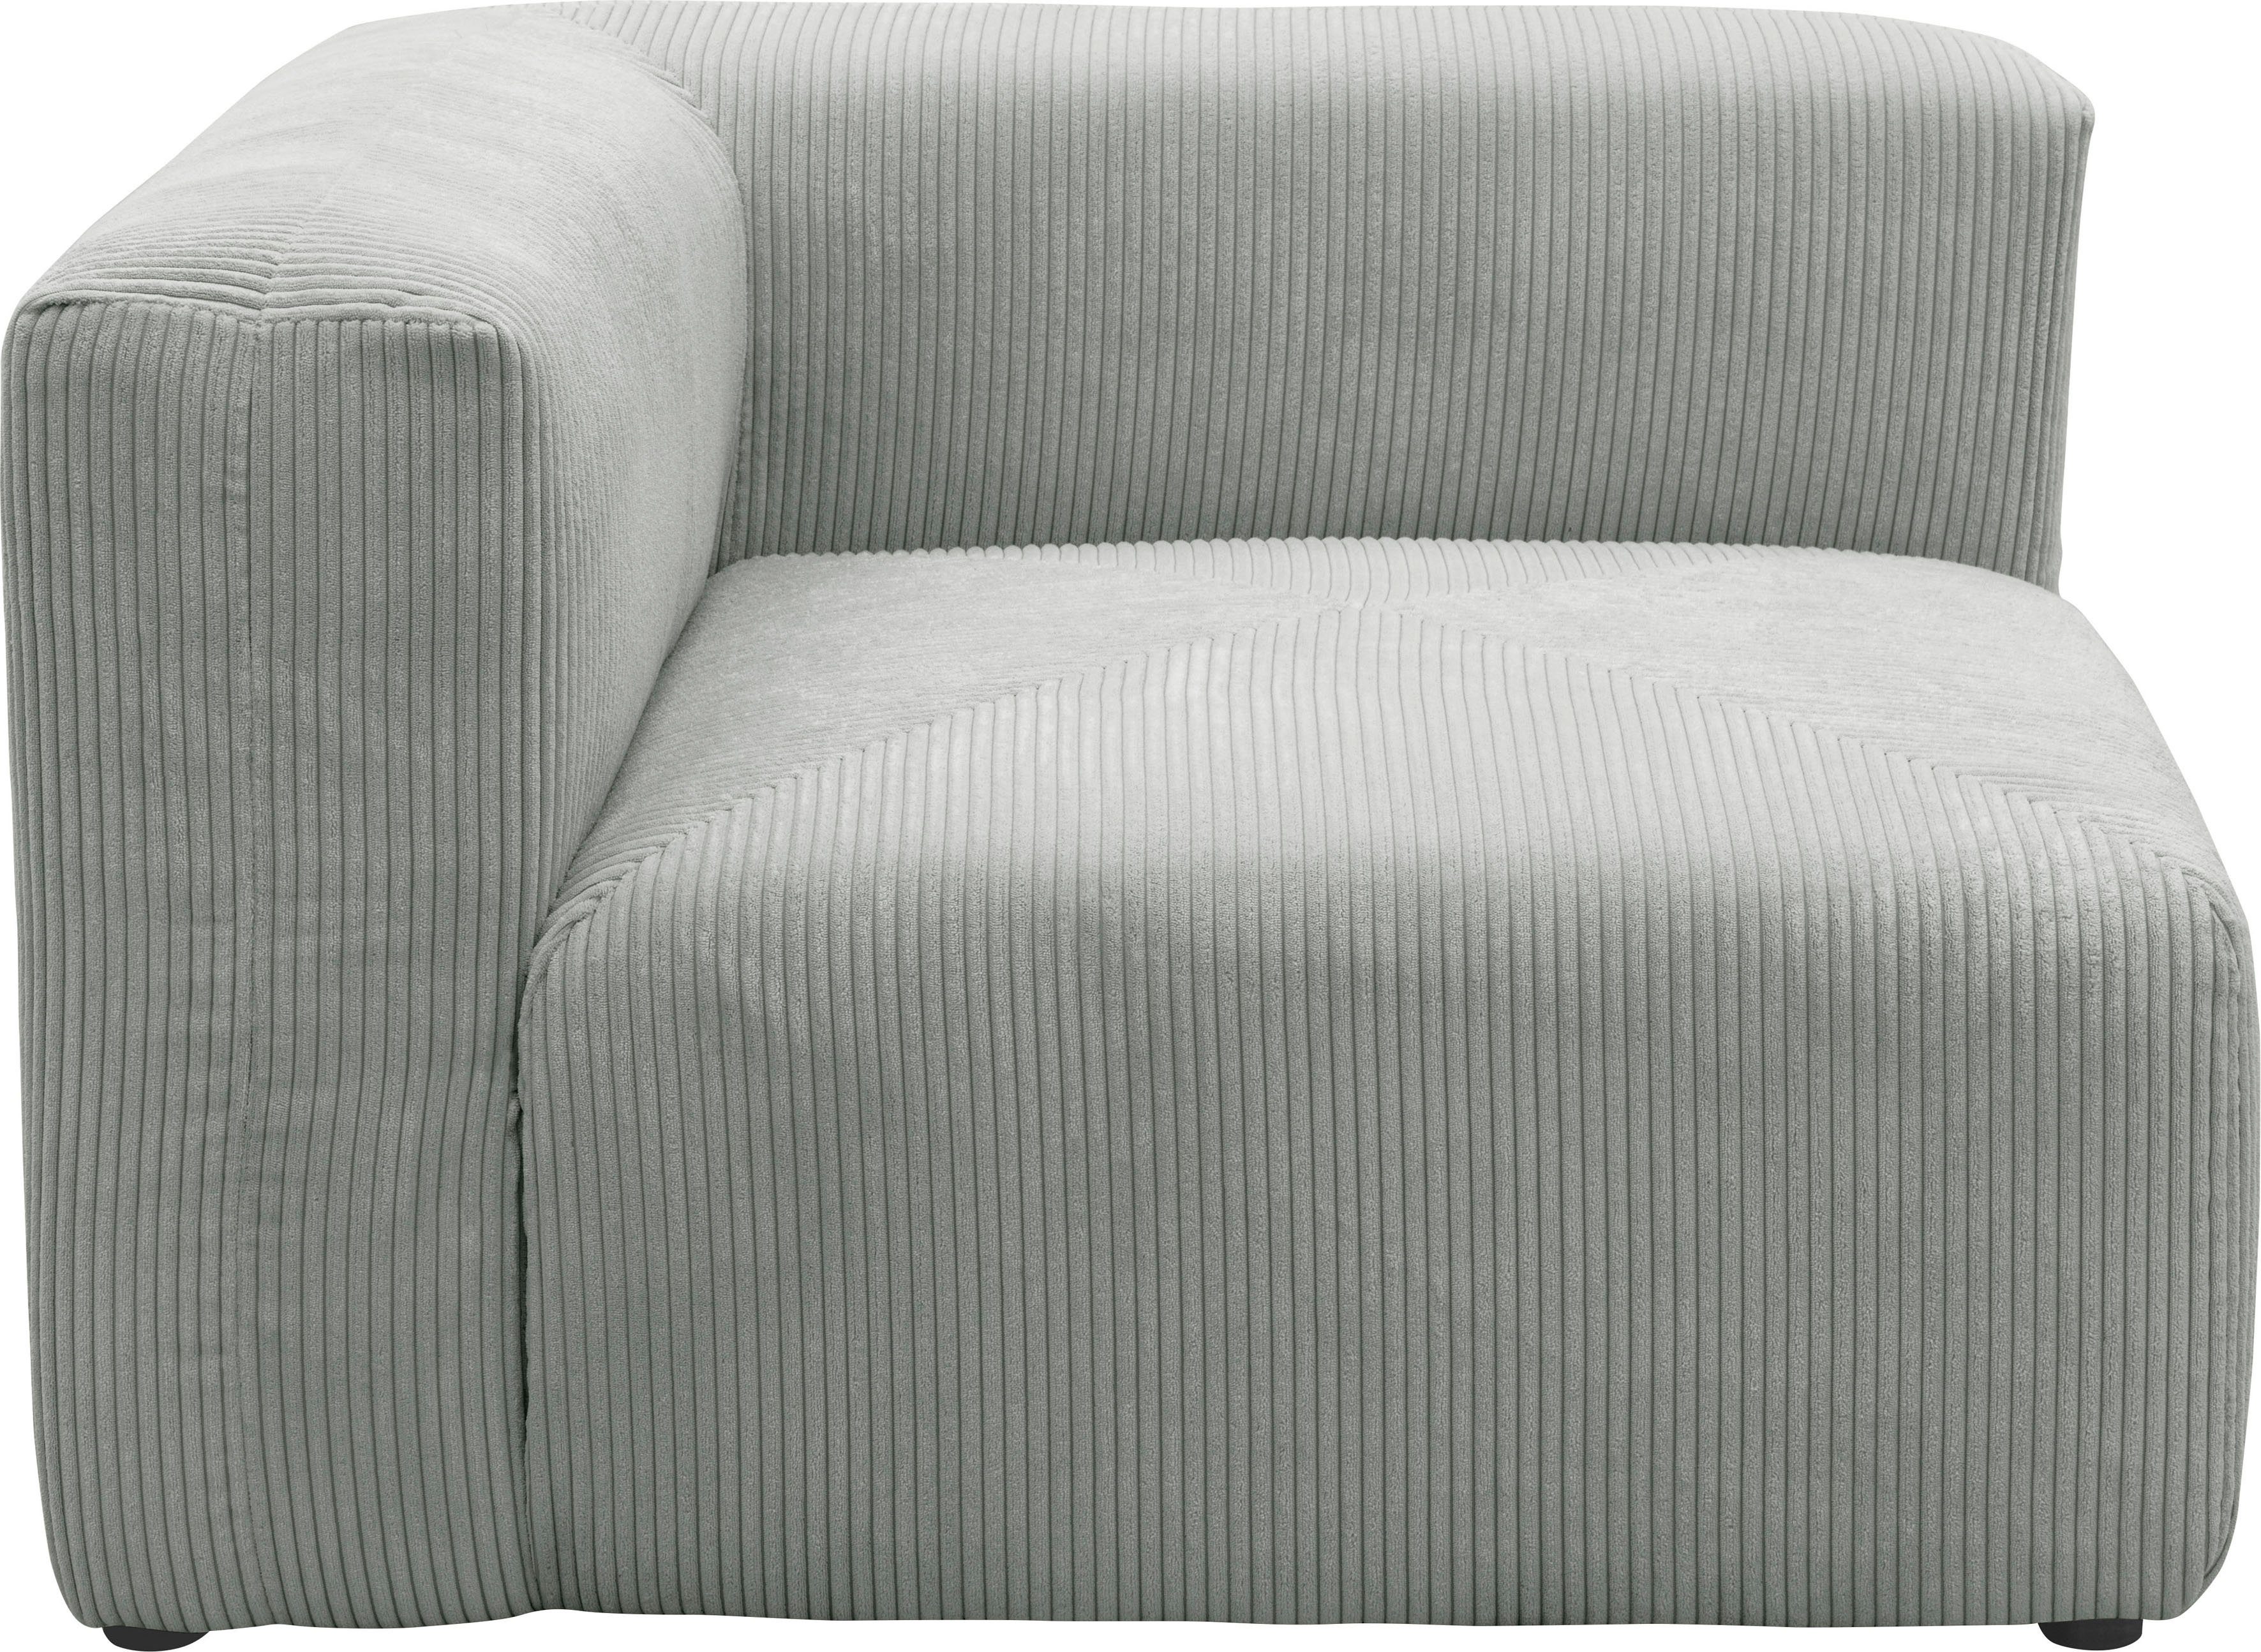 Sofa-Eckelement hellgrau RAUM.ID stellbar Gerrid, einzeln Modul-Eckelement, Cord-Bezug, auch